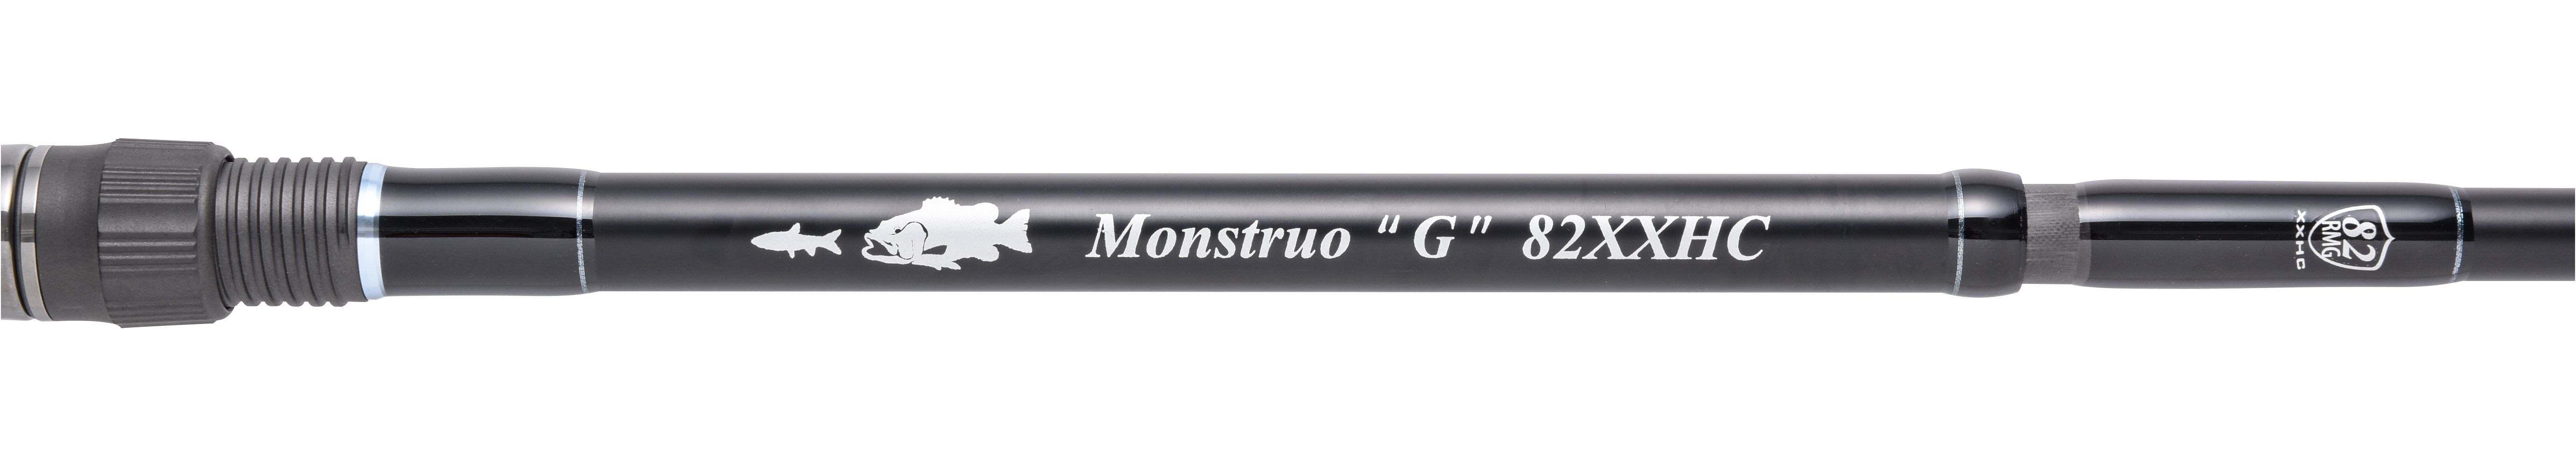 Monstruo”G” 82XXHC | グリップ